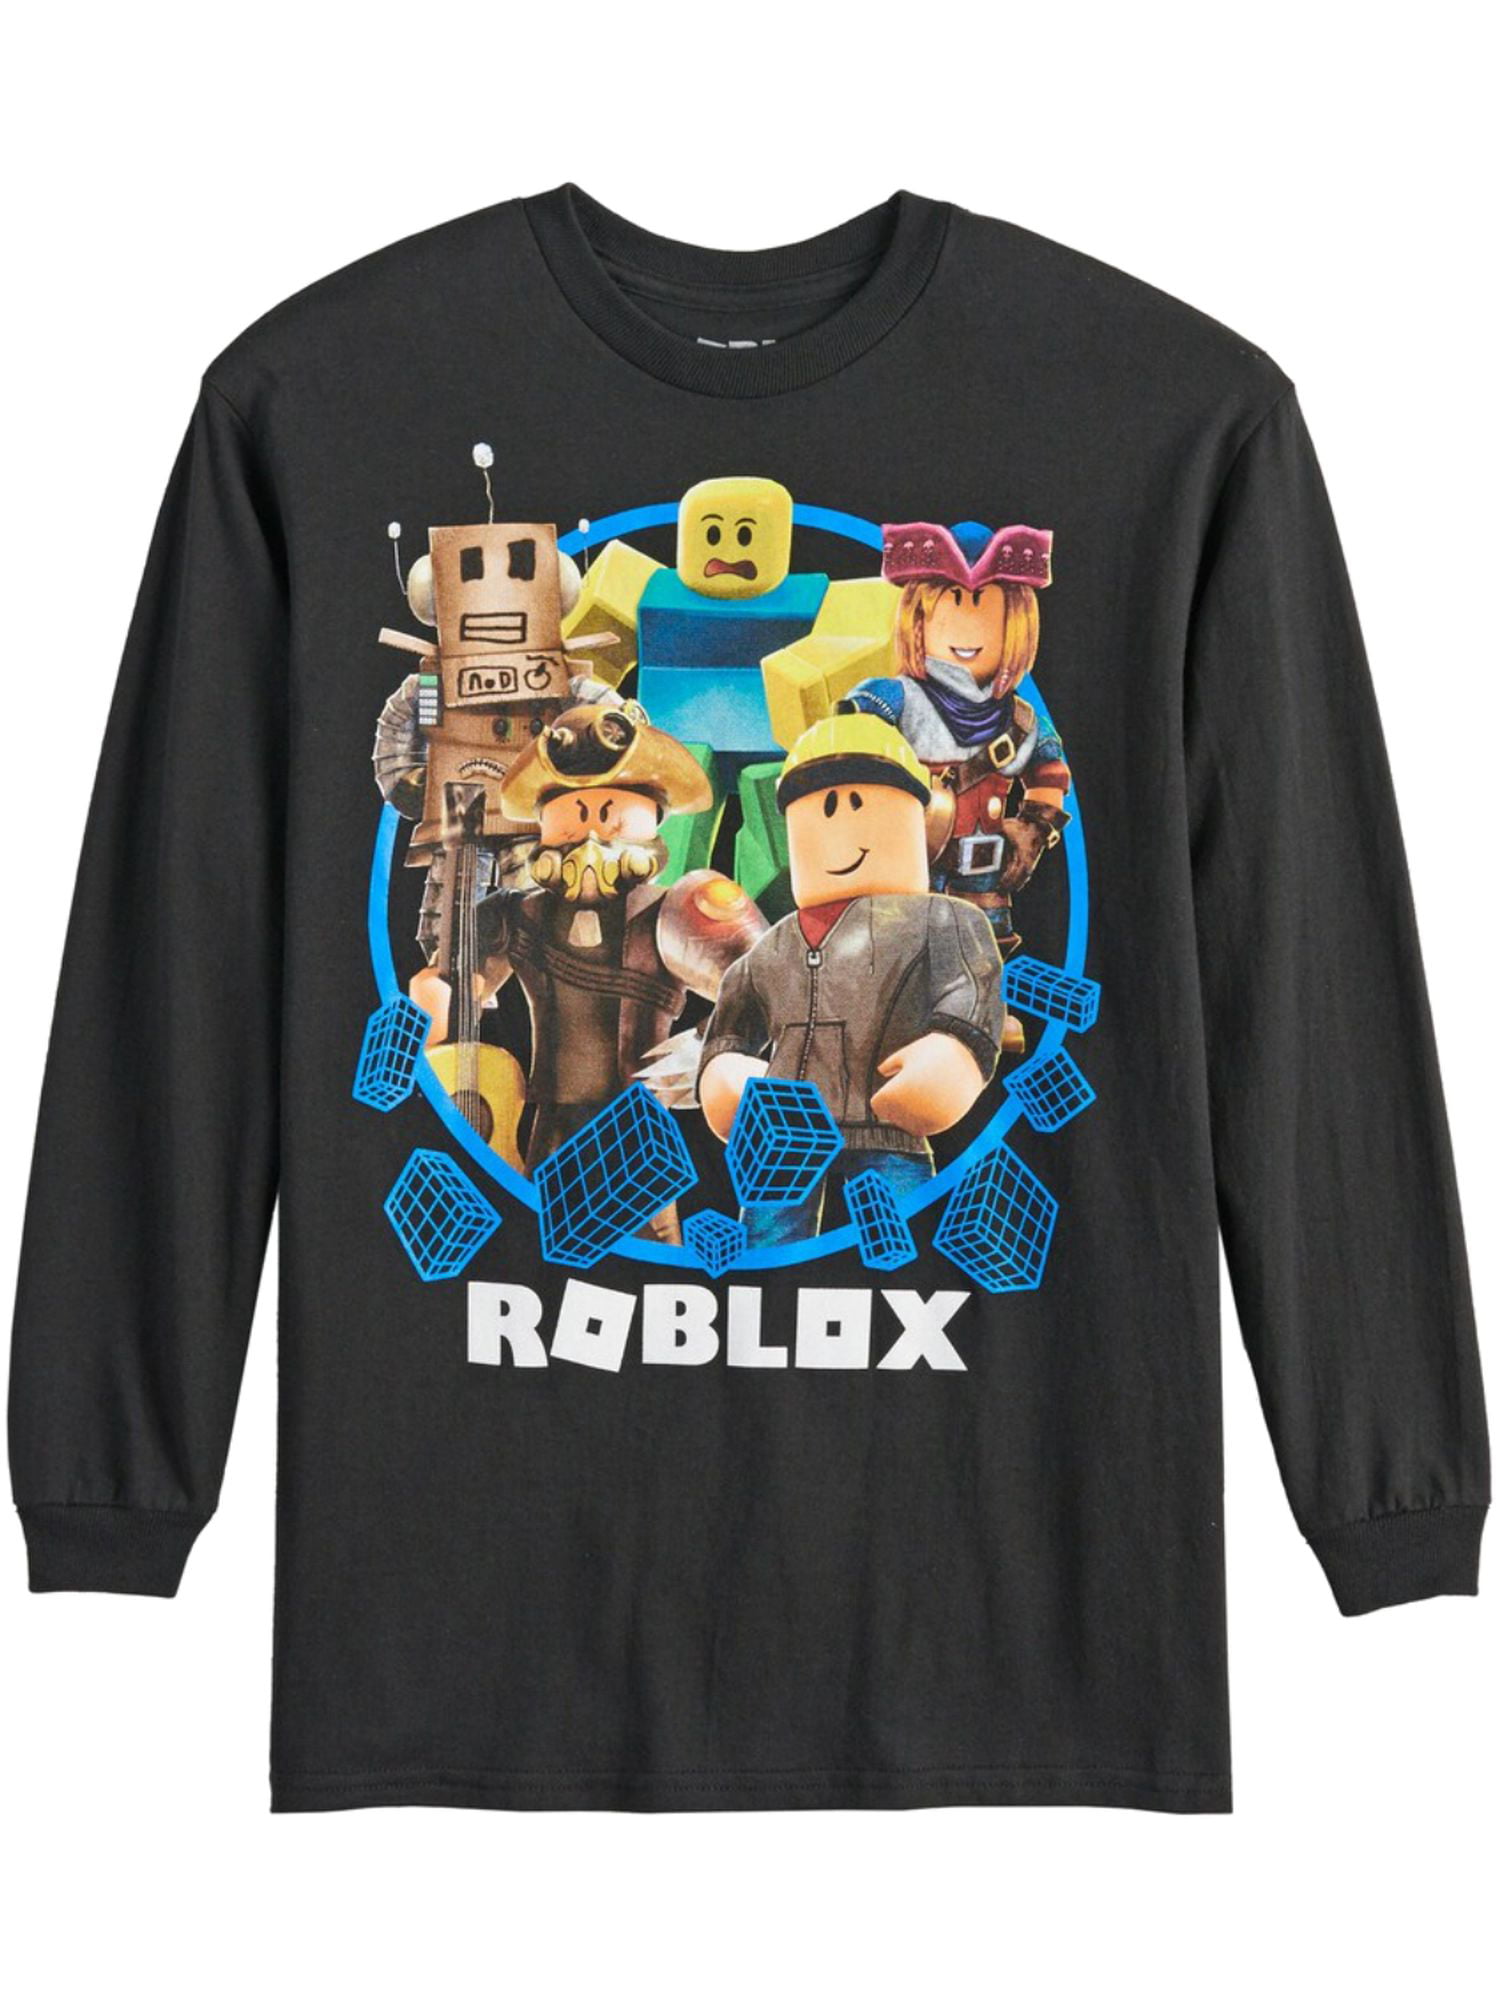 Boys Black Roblox Geometric Character Long Sleeve T Shirt Tee Walmart Com Walmart Com - hoodie strings roblox t shirt